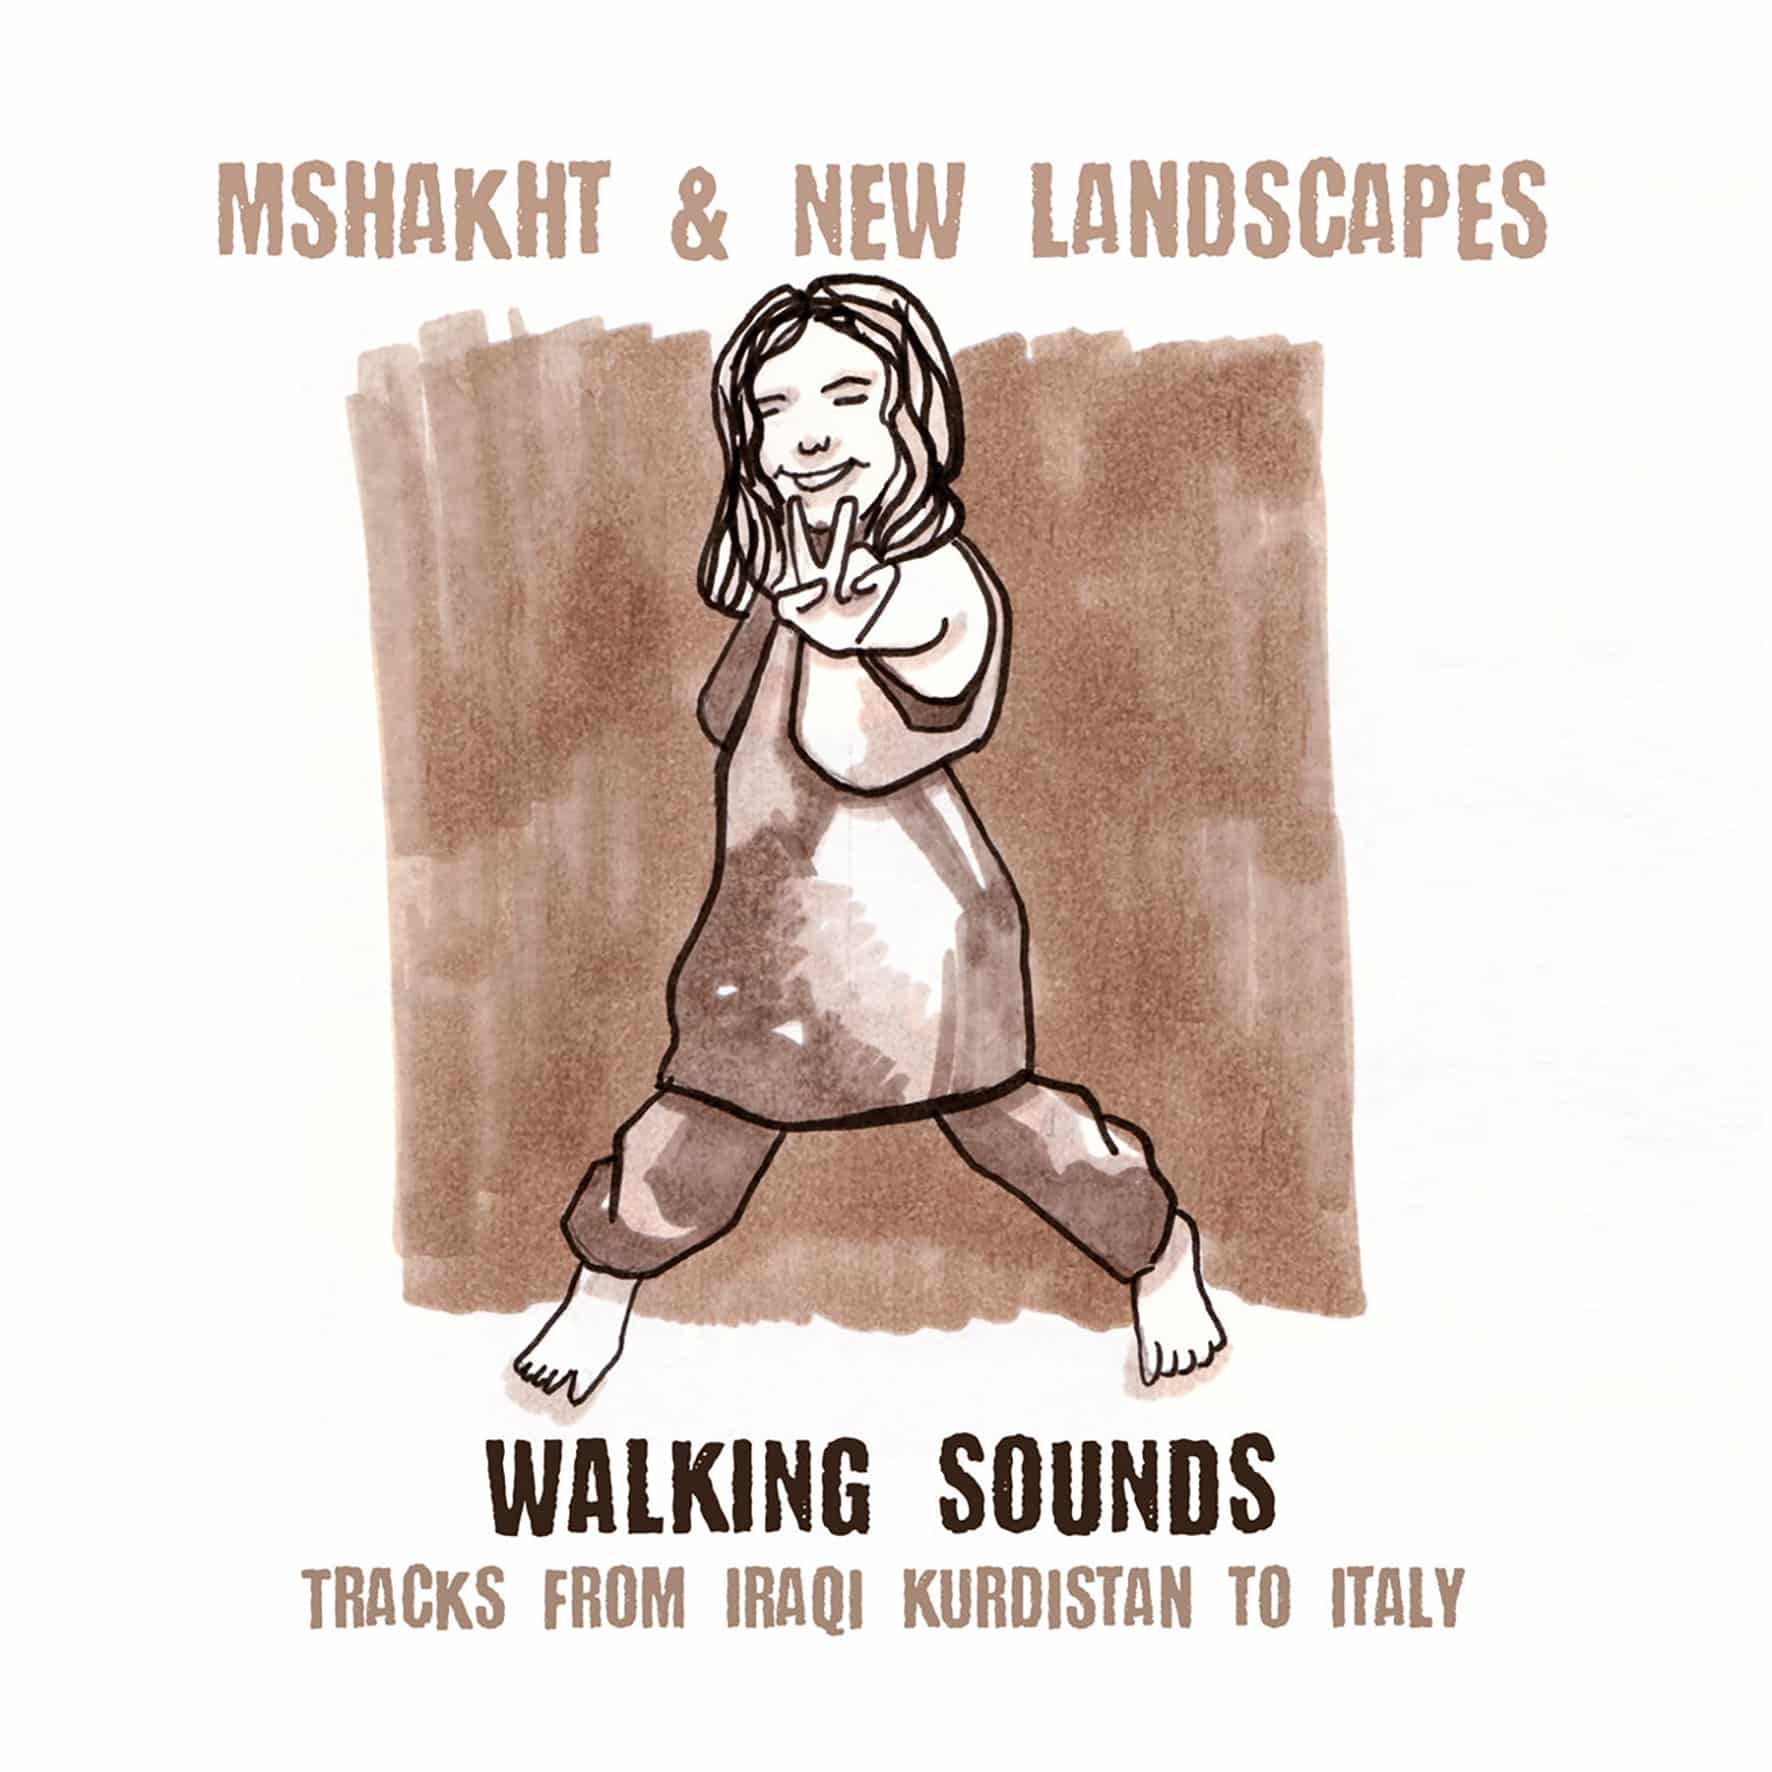 Mshakht & New Landscapes - Tracks from Iraqi Kurdistan to Italy